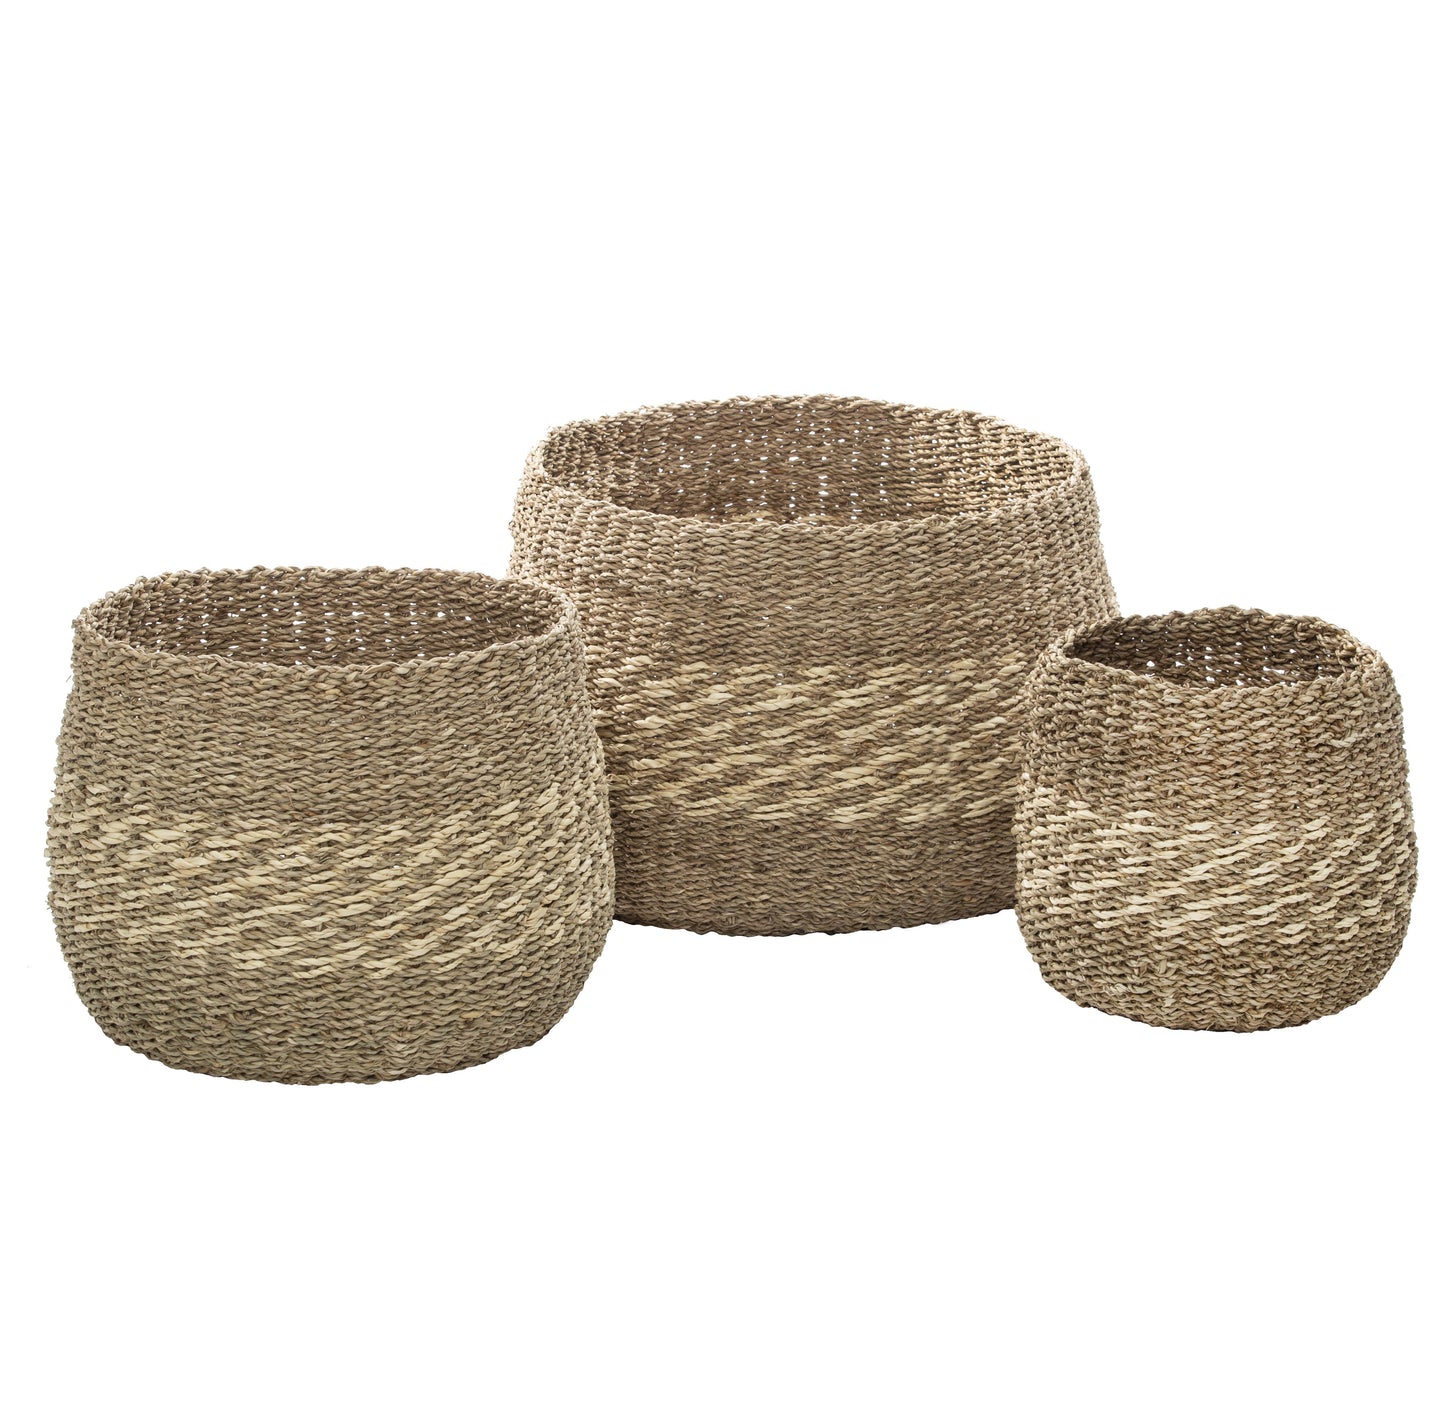 Raffles Basket - 3 sizes